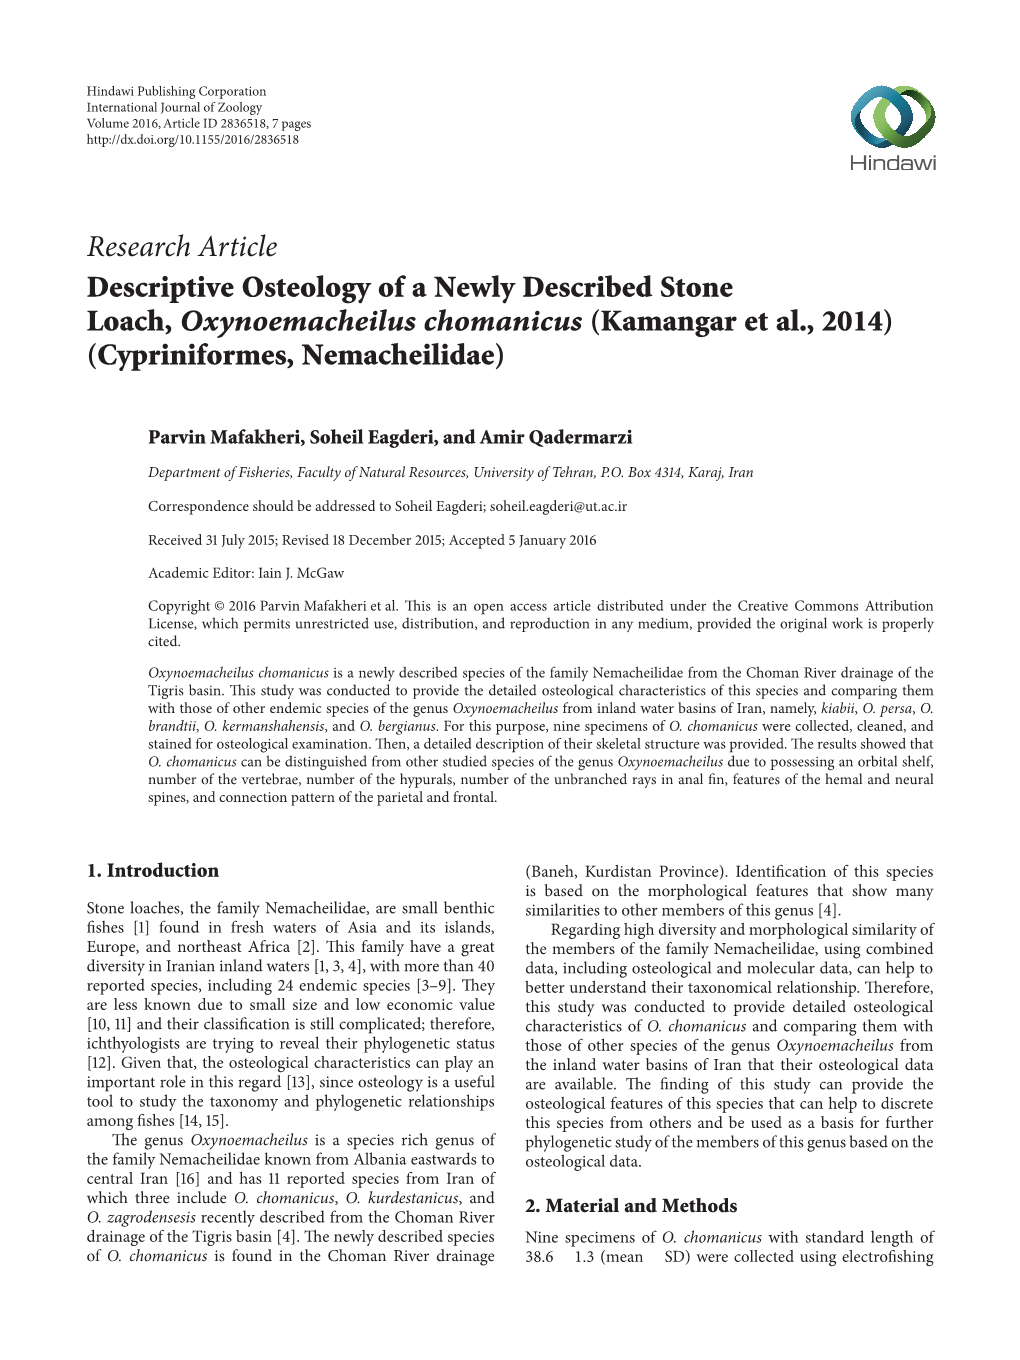 Descriptive Osteology of a Newly Described Stone Loach, Oxynoemacheilus Chomanicus (Kamangar Et Al., 2014)(Cypriniformes, Nemacheilidae)